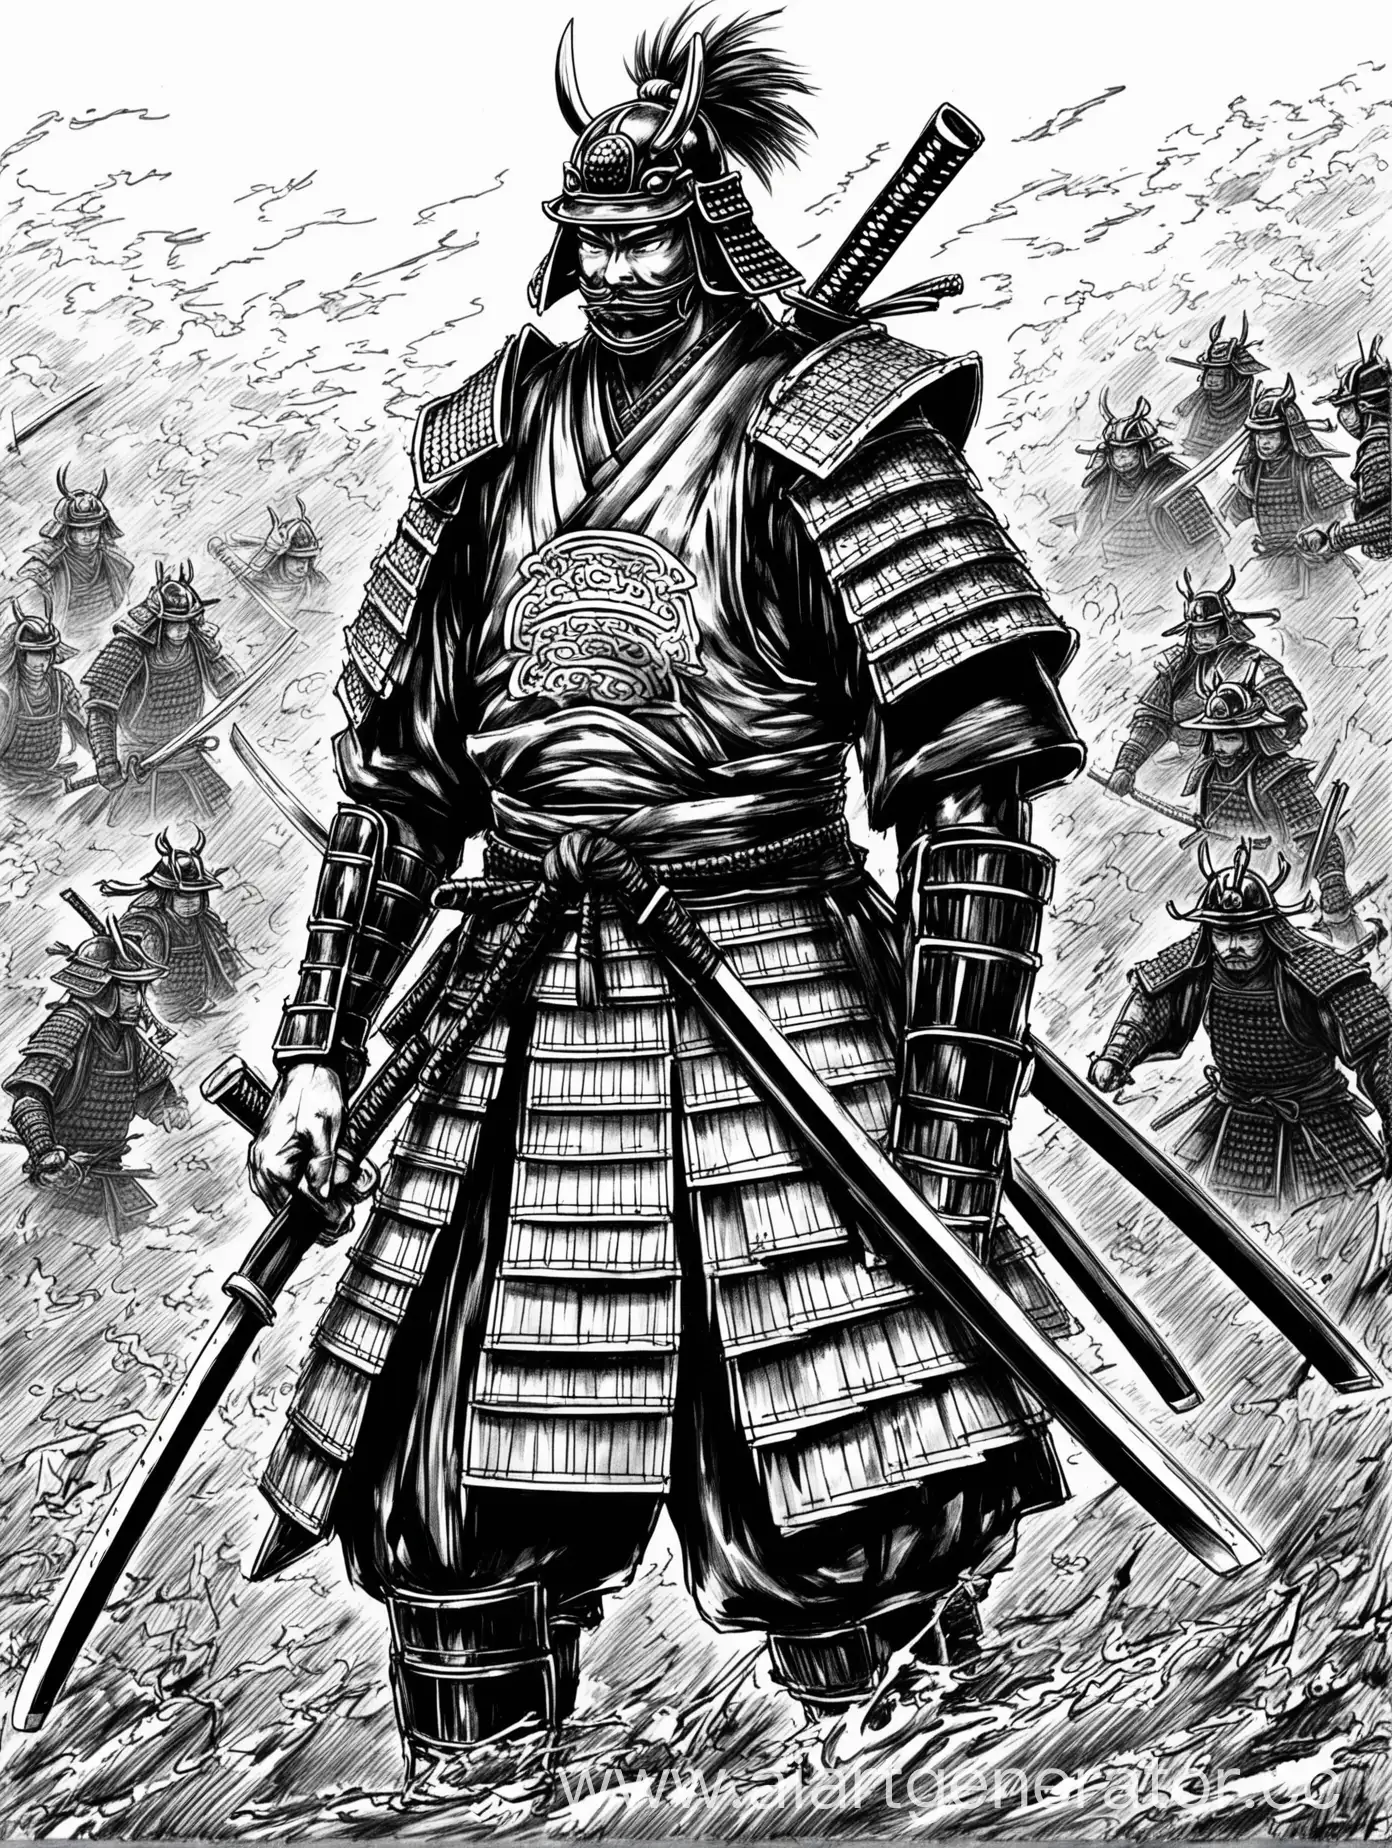 Samurai-Warrior-with-Katana-Swords-in-Monochrome-Sketch